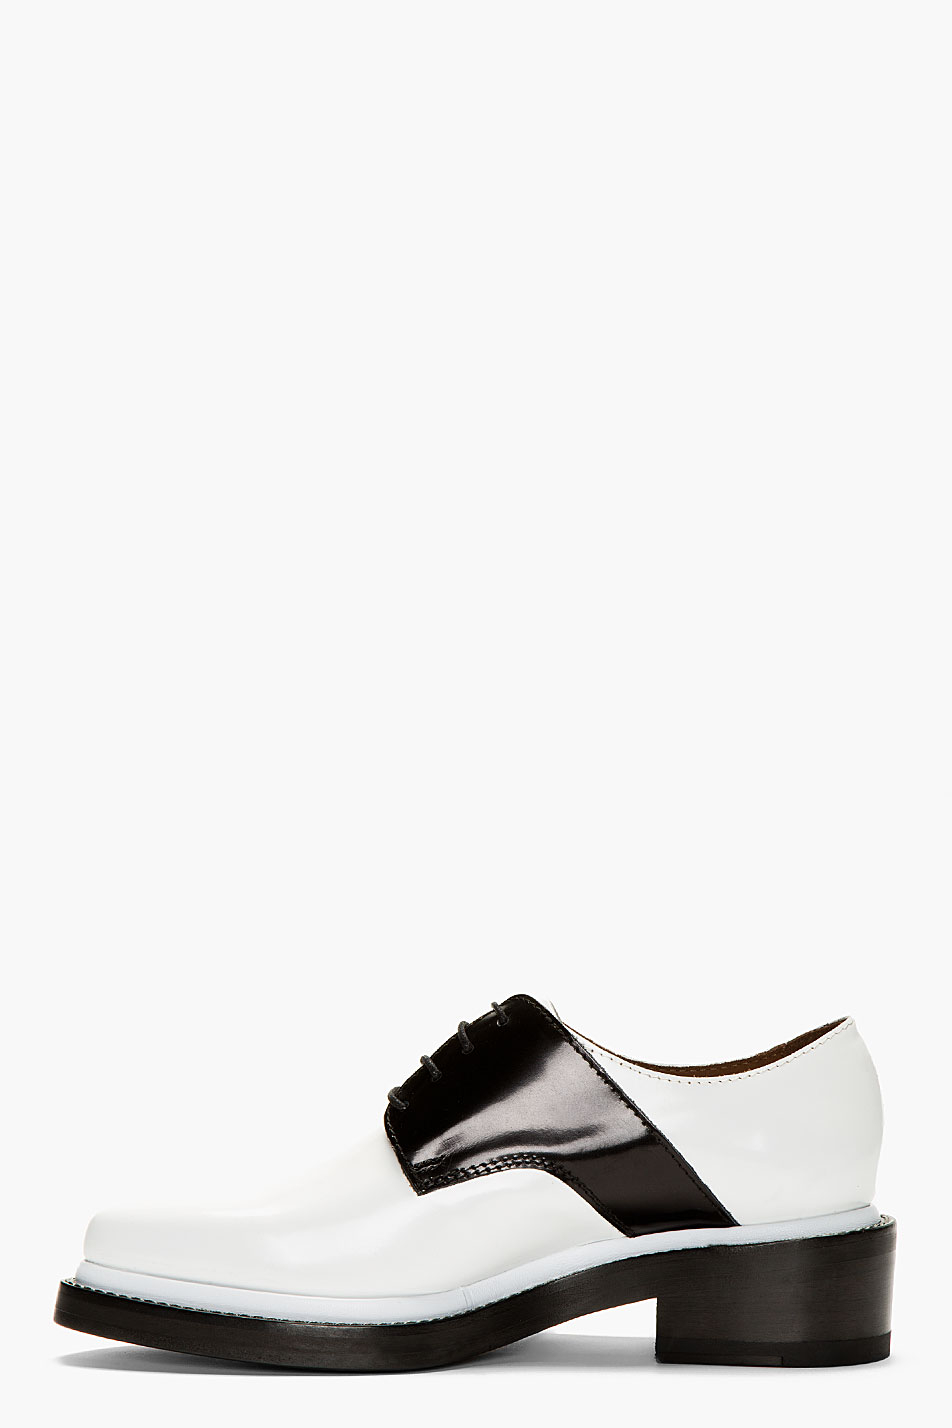 Acne Studios Black and White Lark Mix Saddle Shoes in White (black) | Lyst